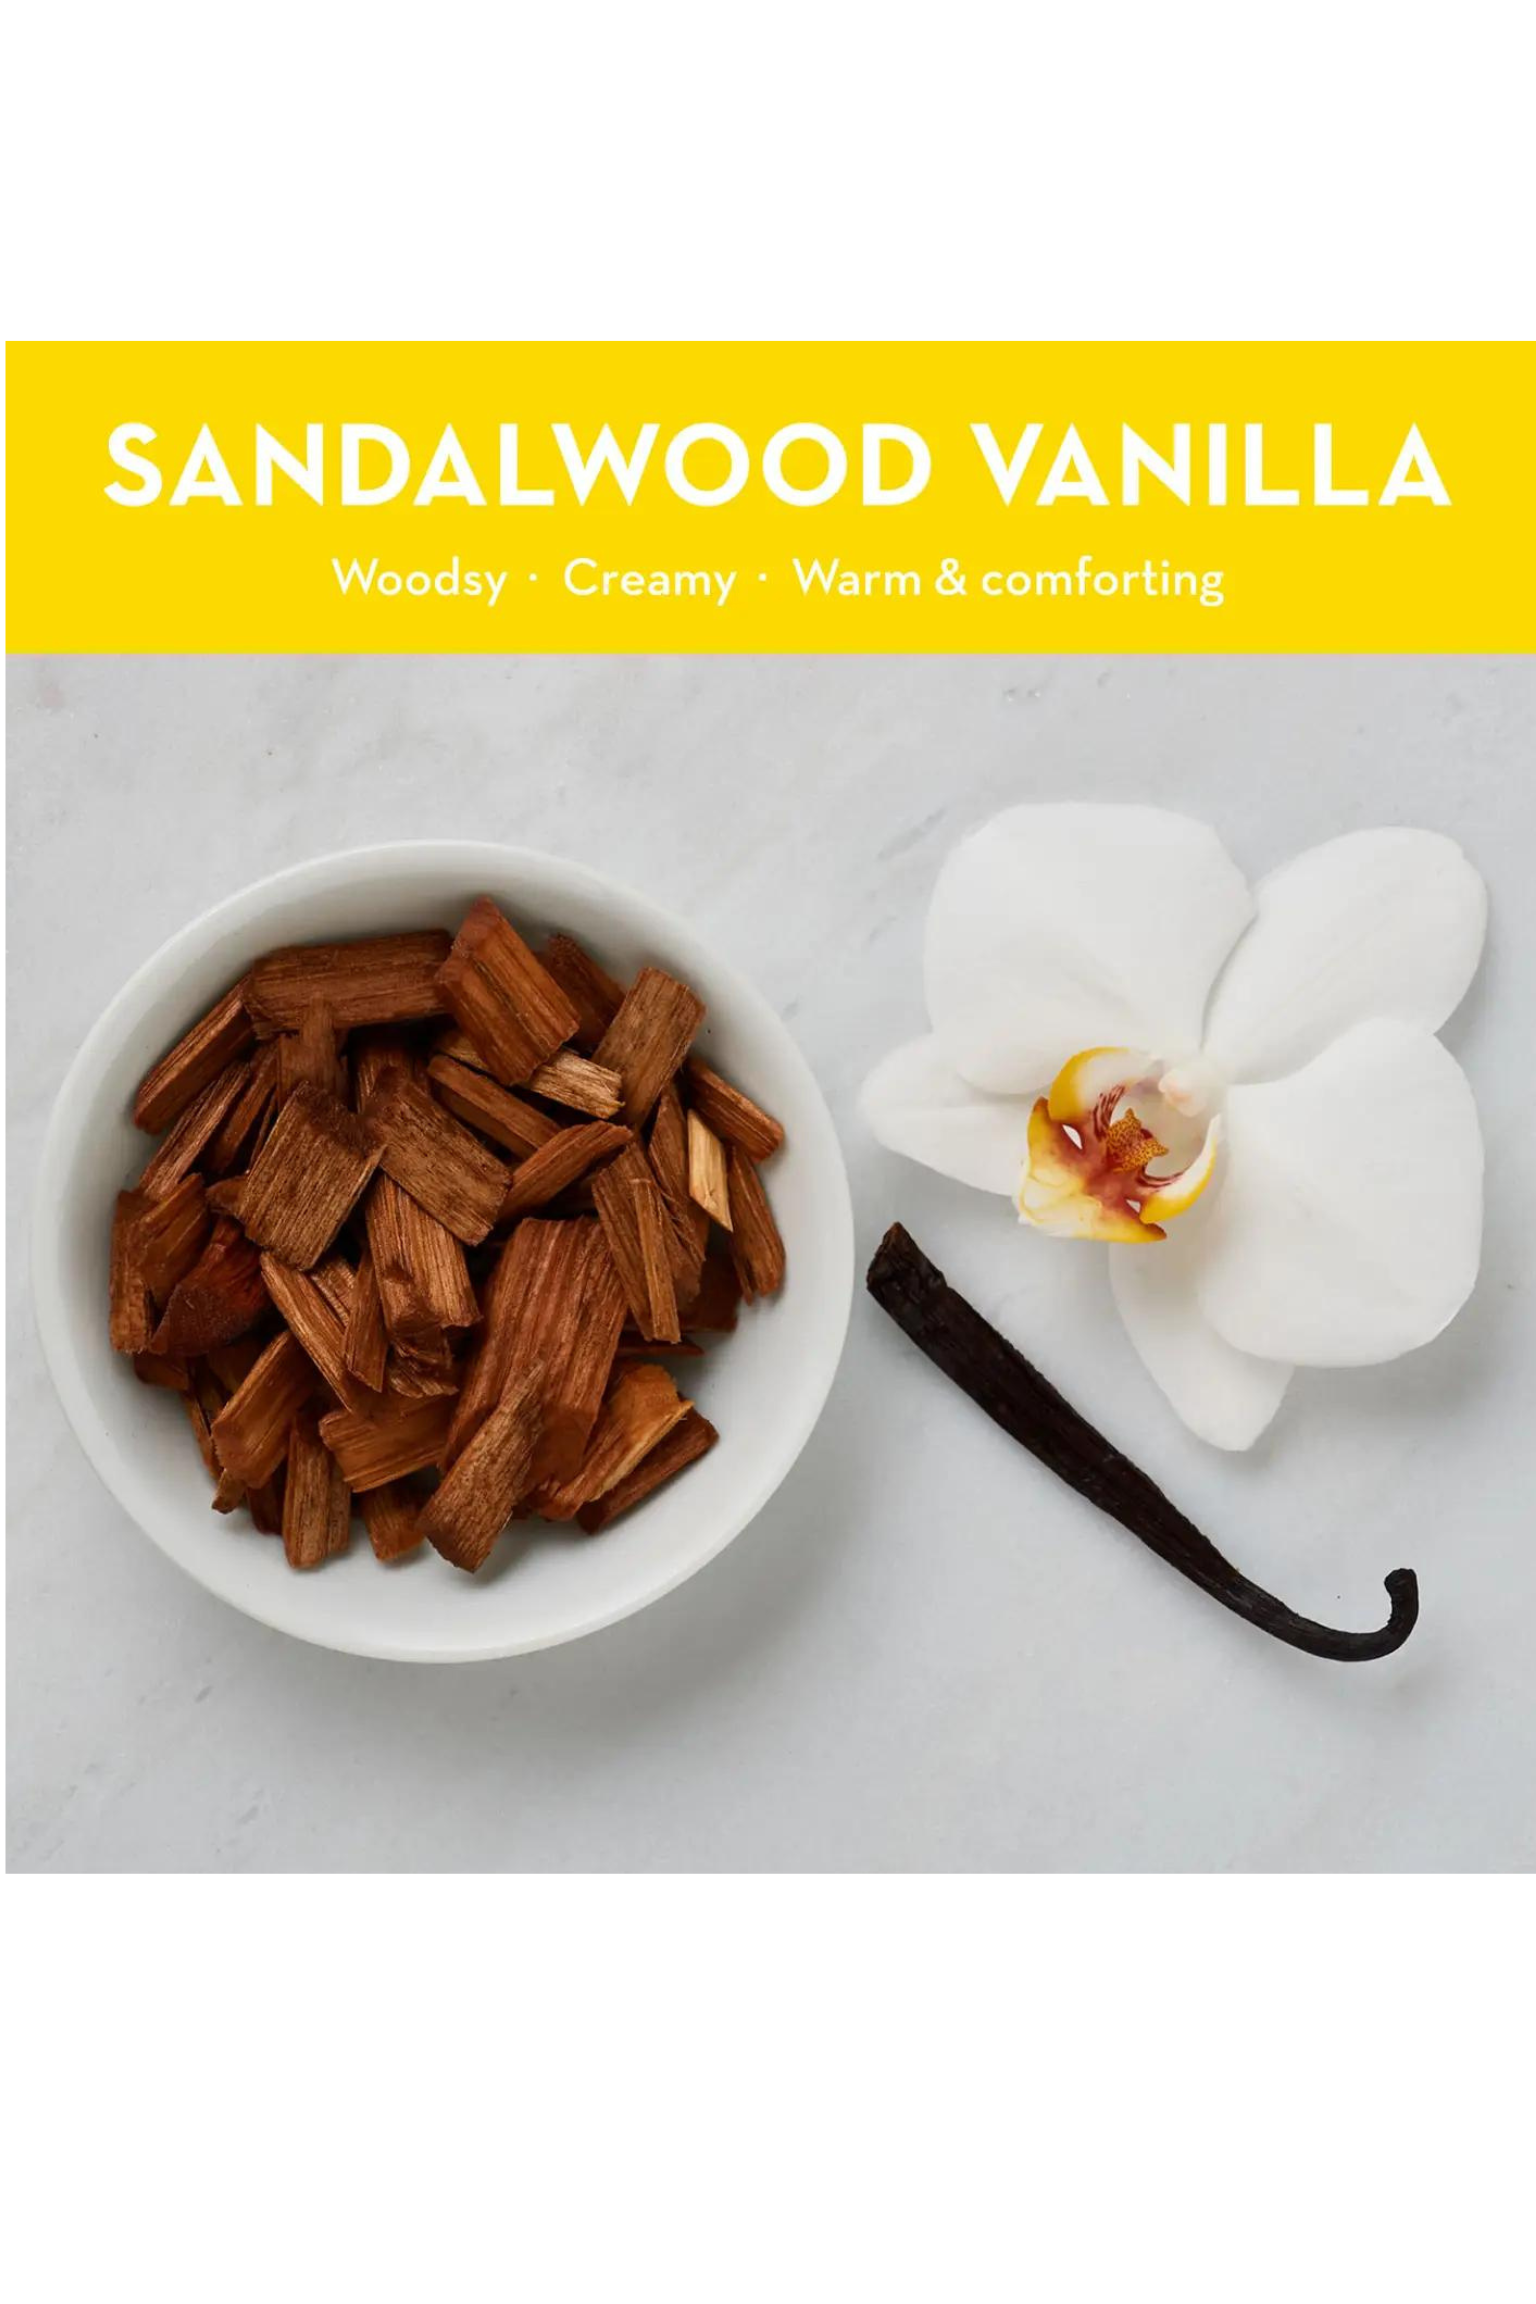 12oz Sandalwood Vanilla